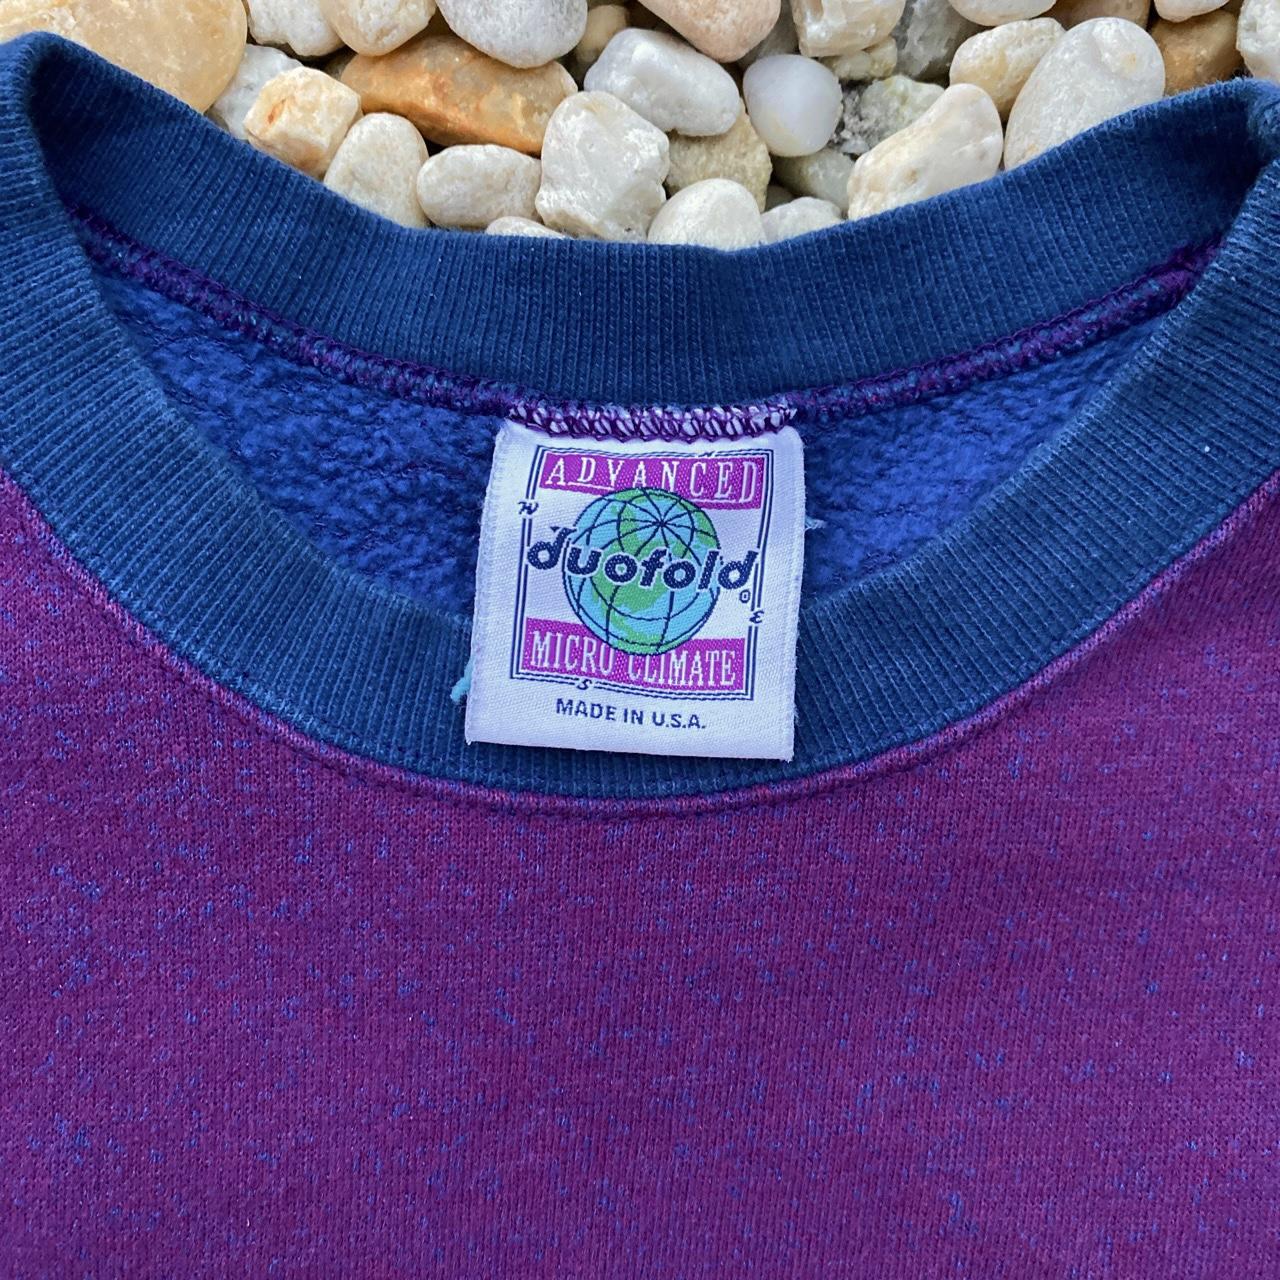 DUOltd Men's Purple and Blue Sweatshirt (2)